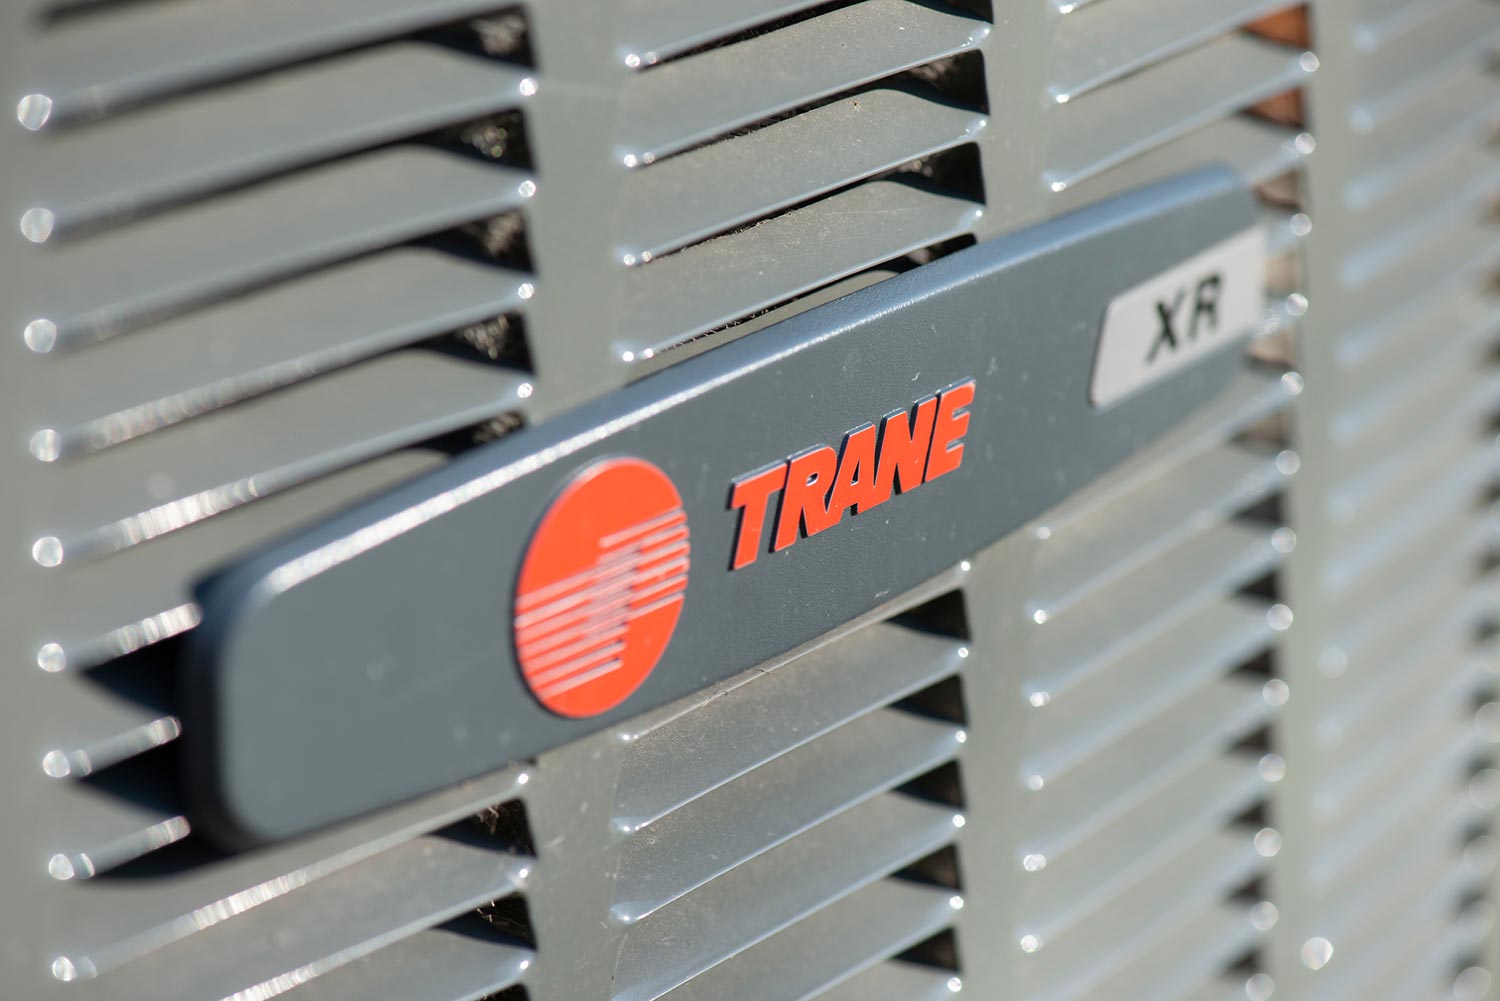 Trance logo